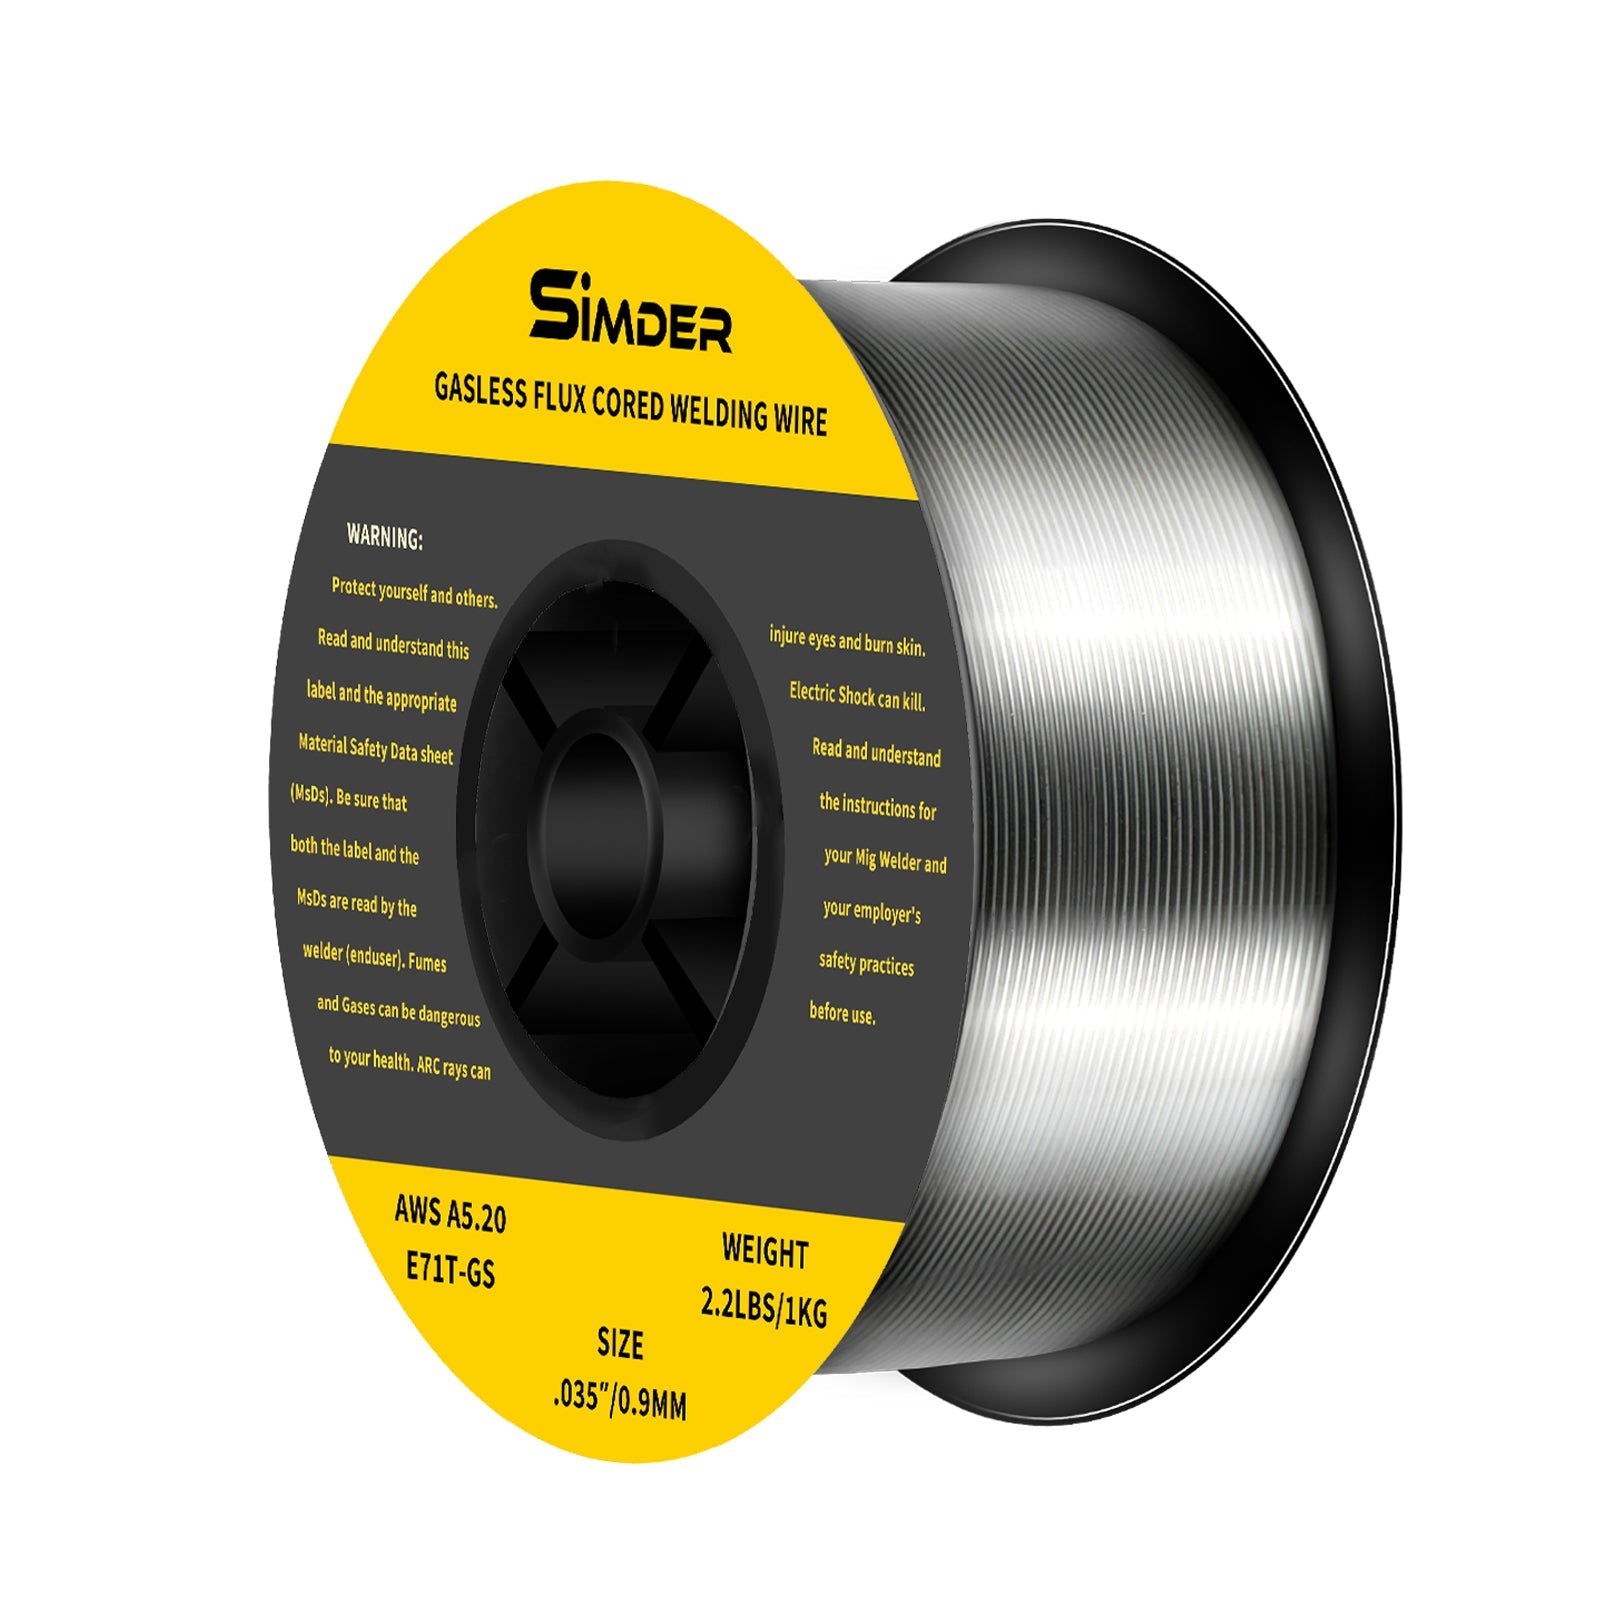 SSimder Flux Core Welding Wire E71TGS.035 2lbs - Welding